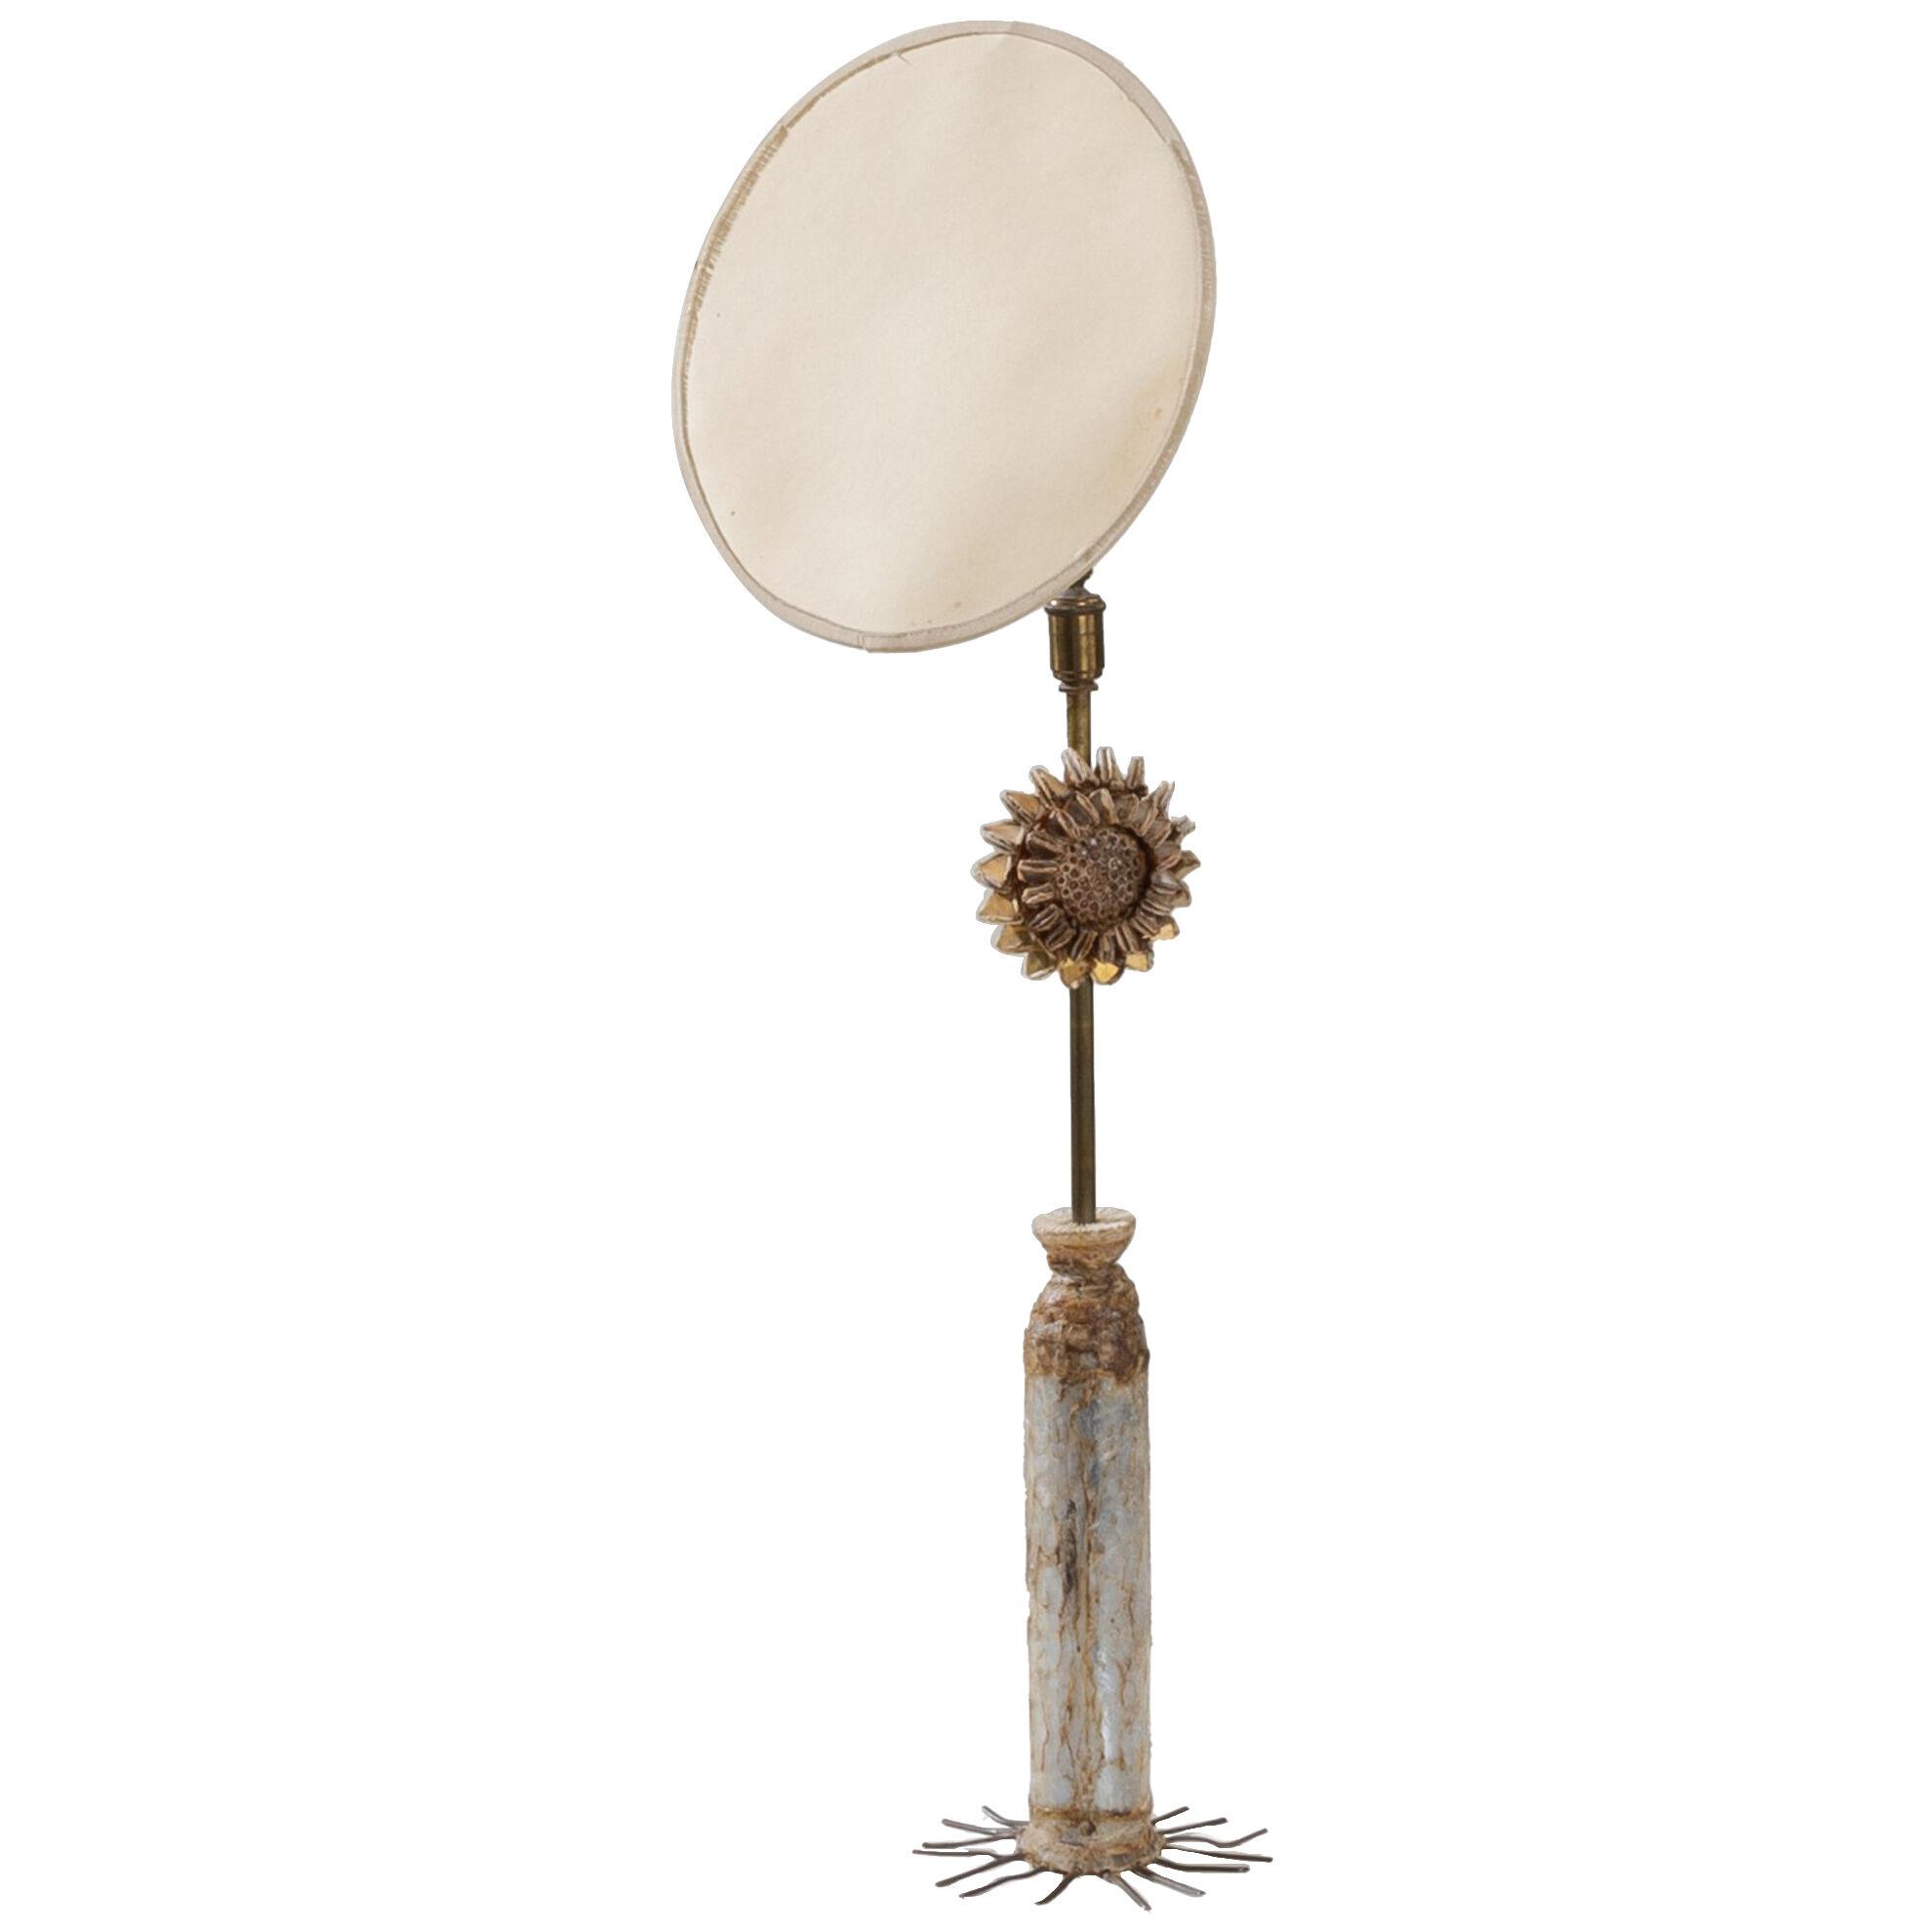 Lampe Fleur by Line Vautrin -Talosel table lamp – France